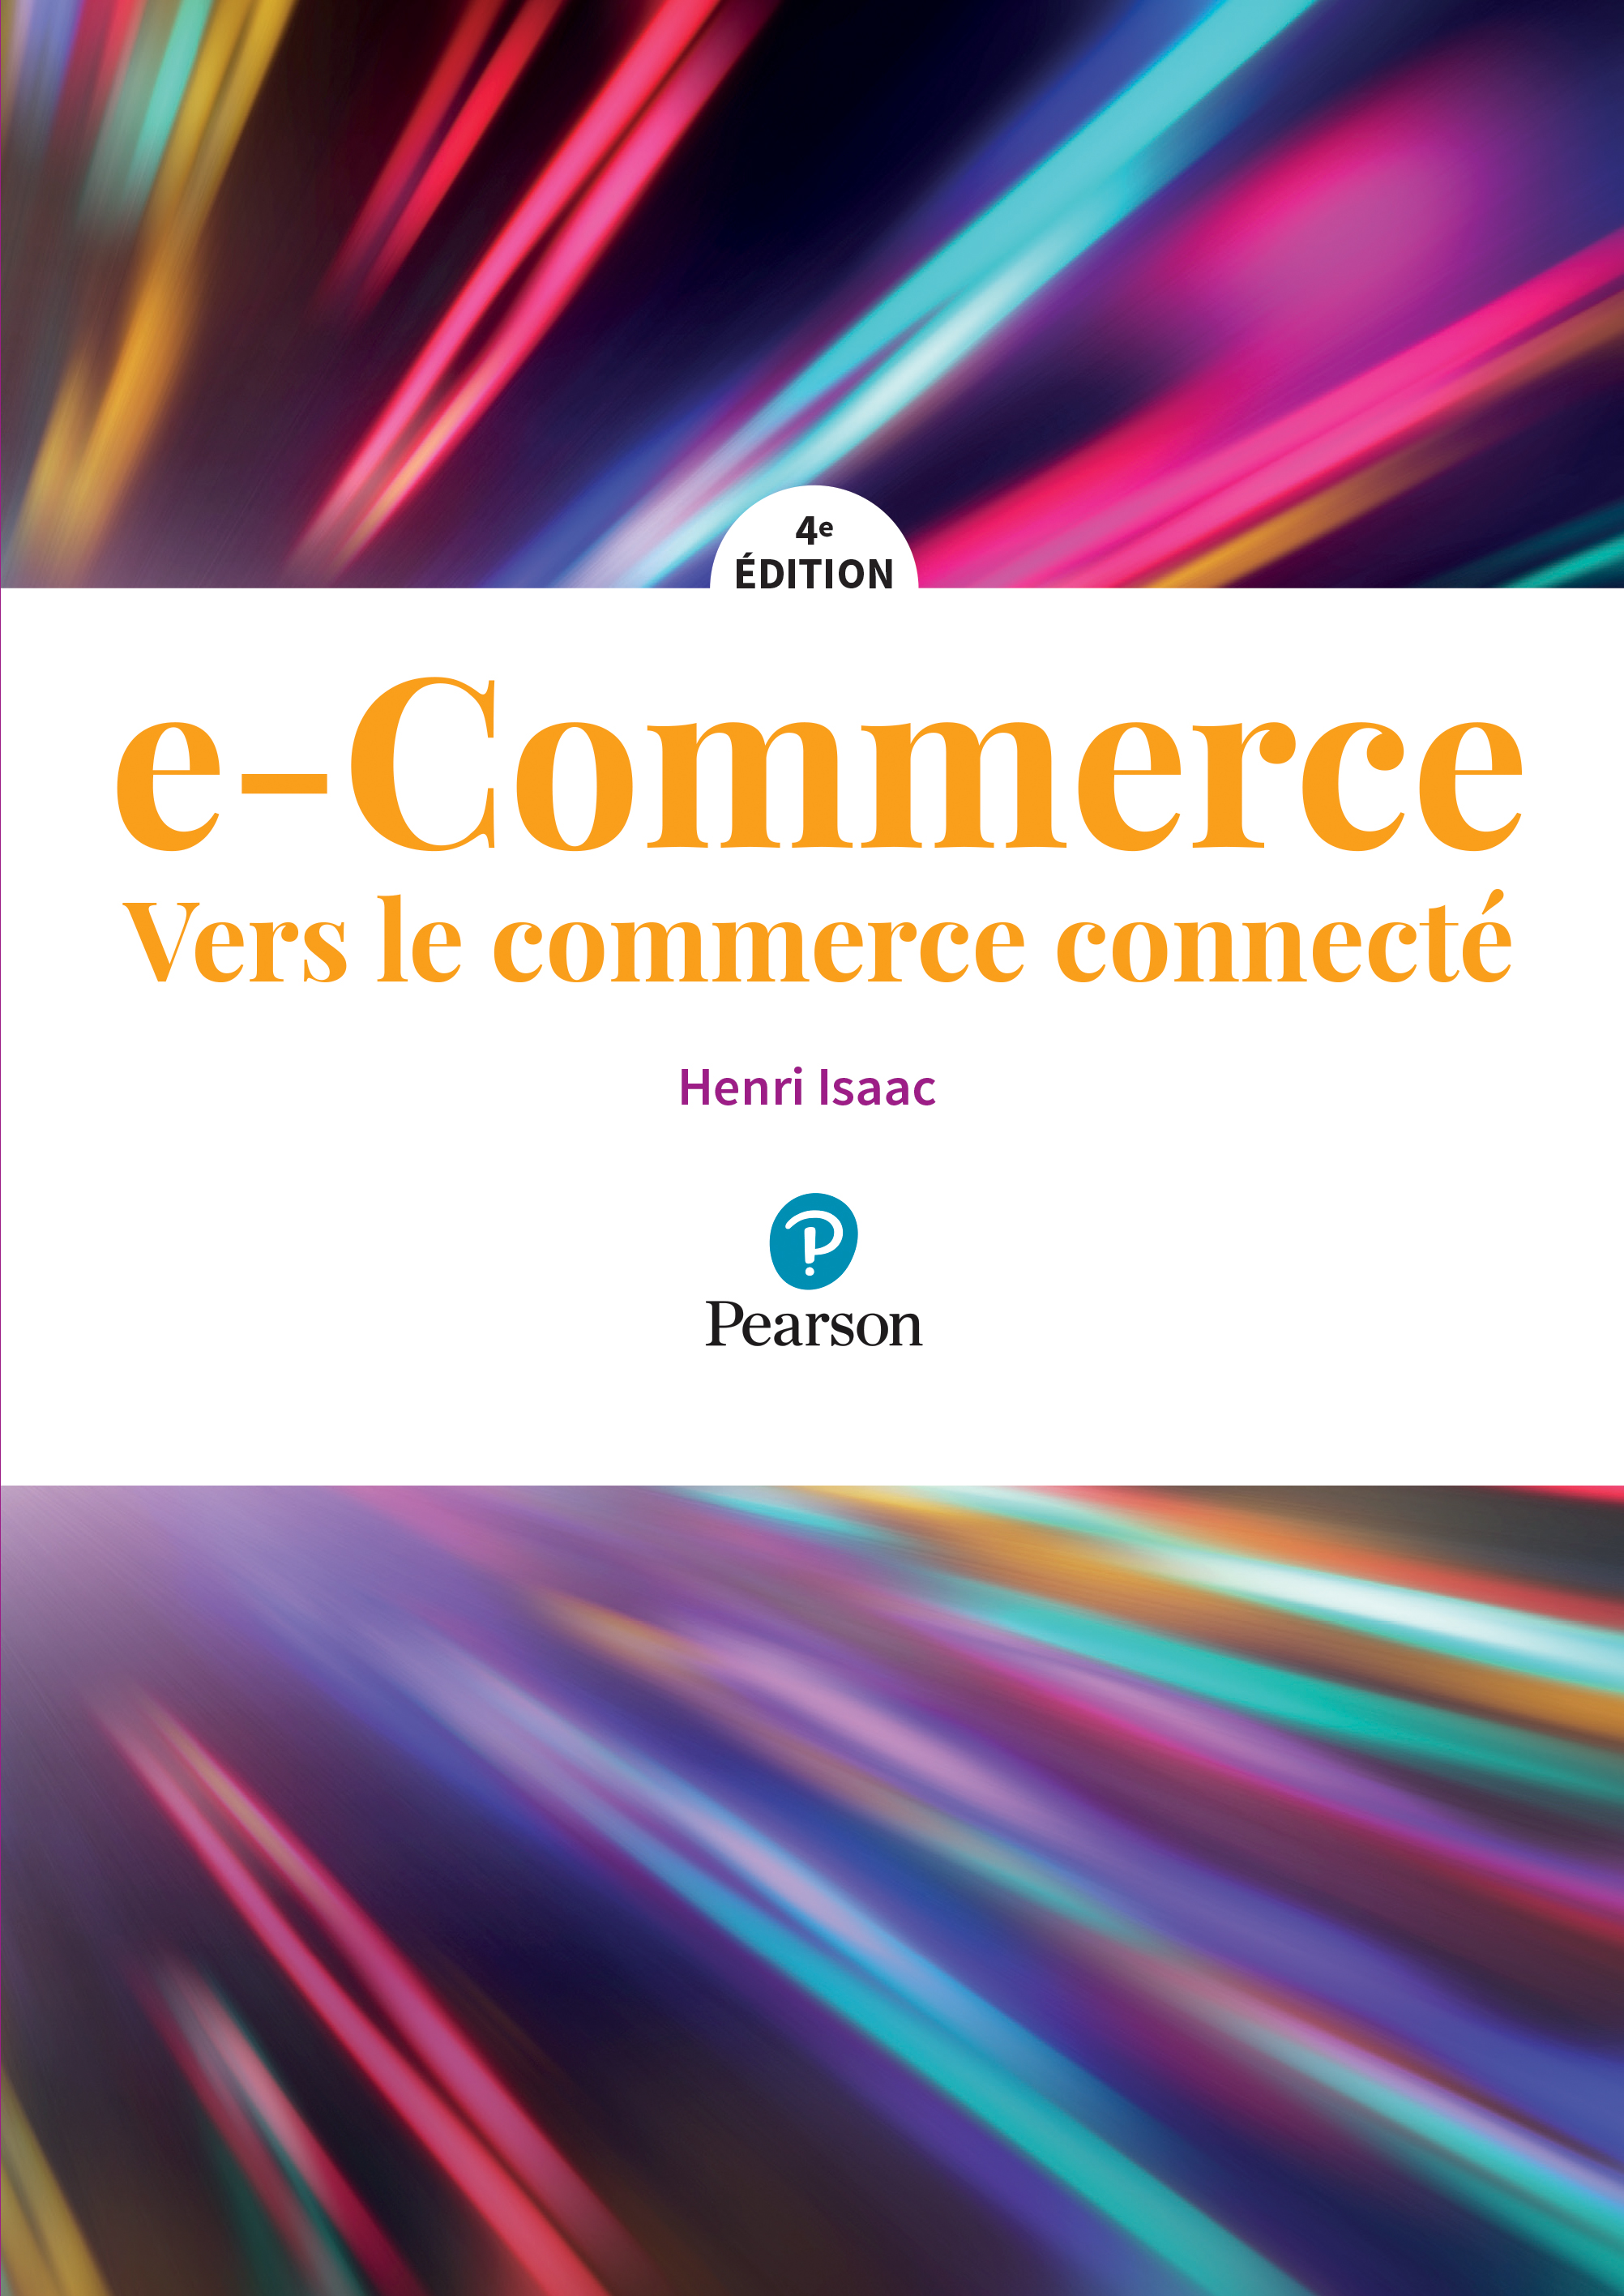 E-commerce - Henri Isaac - Pearson